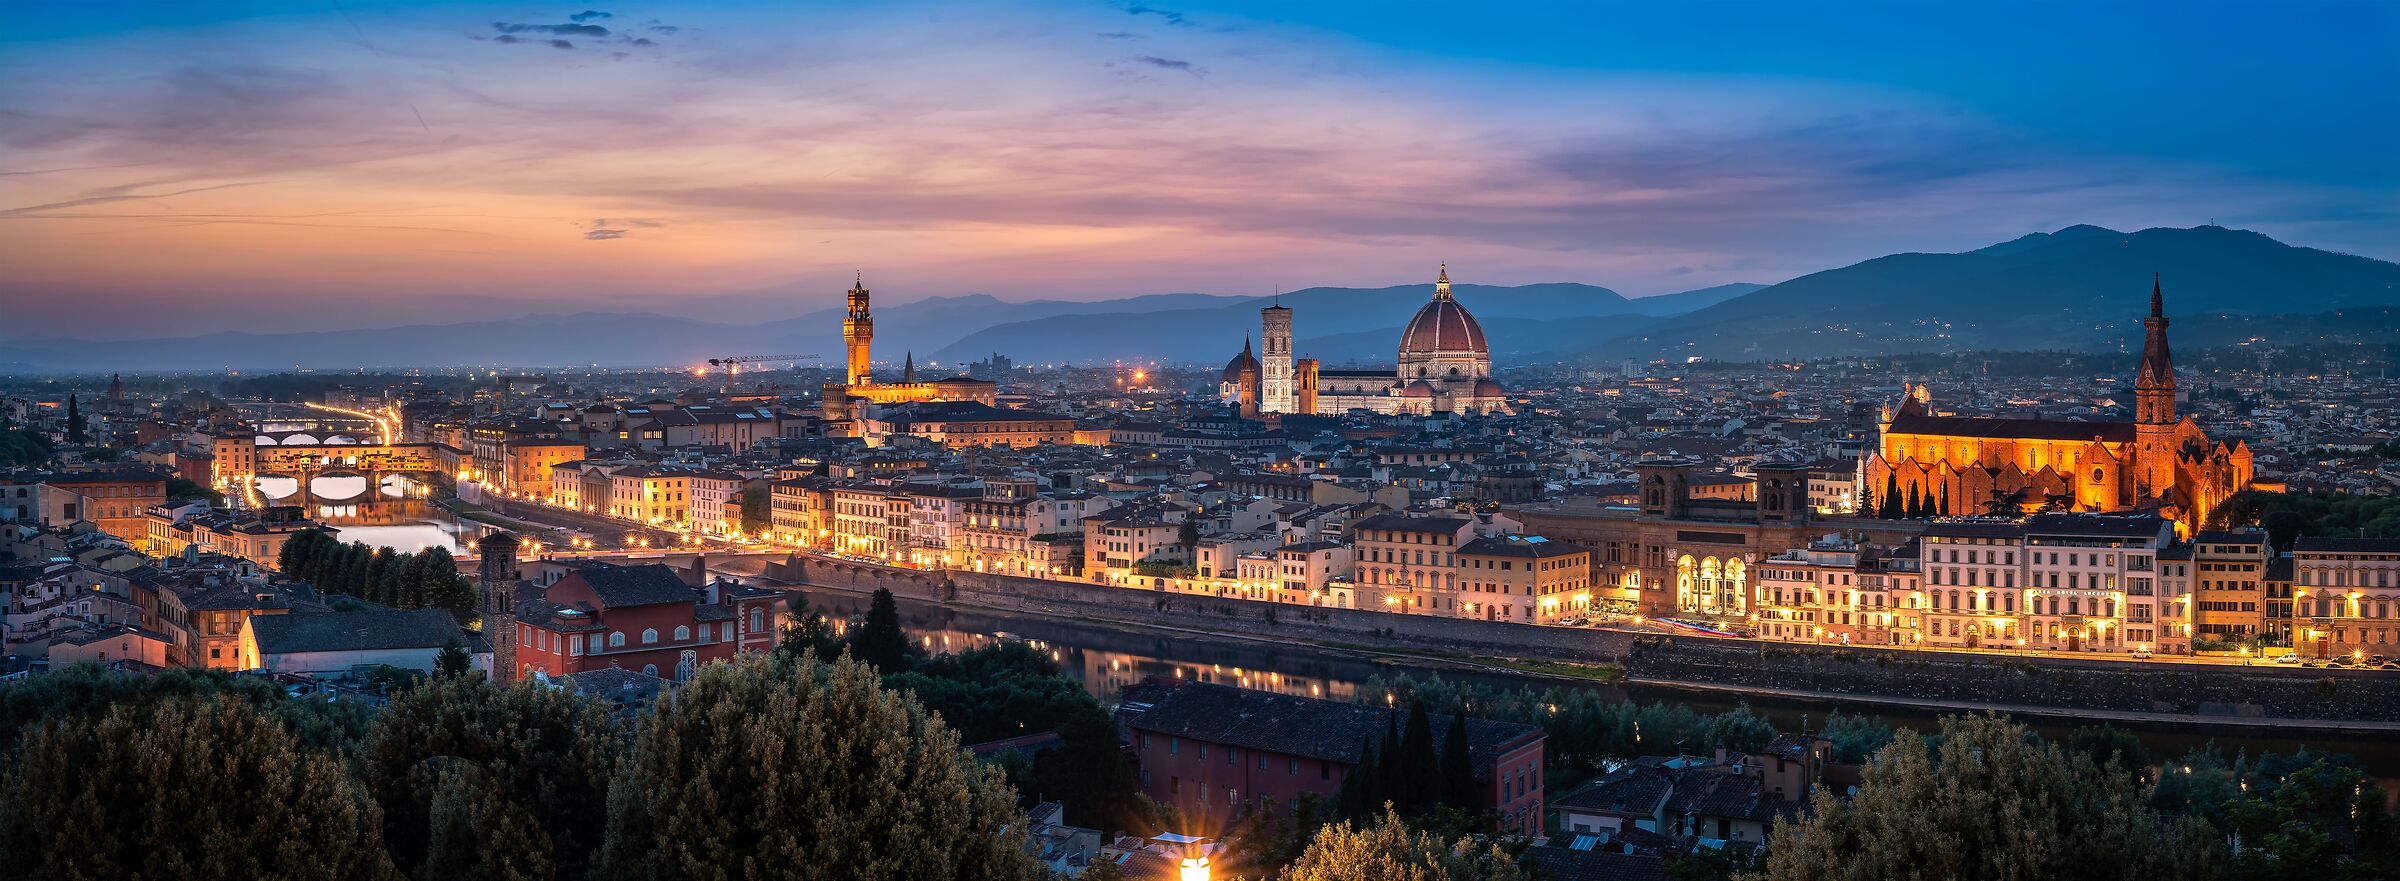 Firenze - Piazzale Michelangelo...